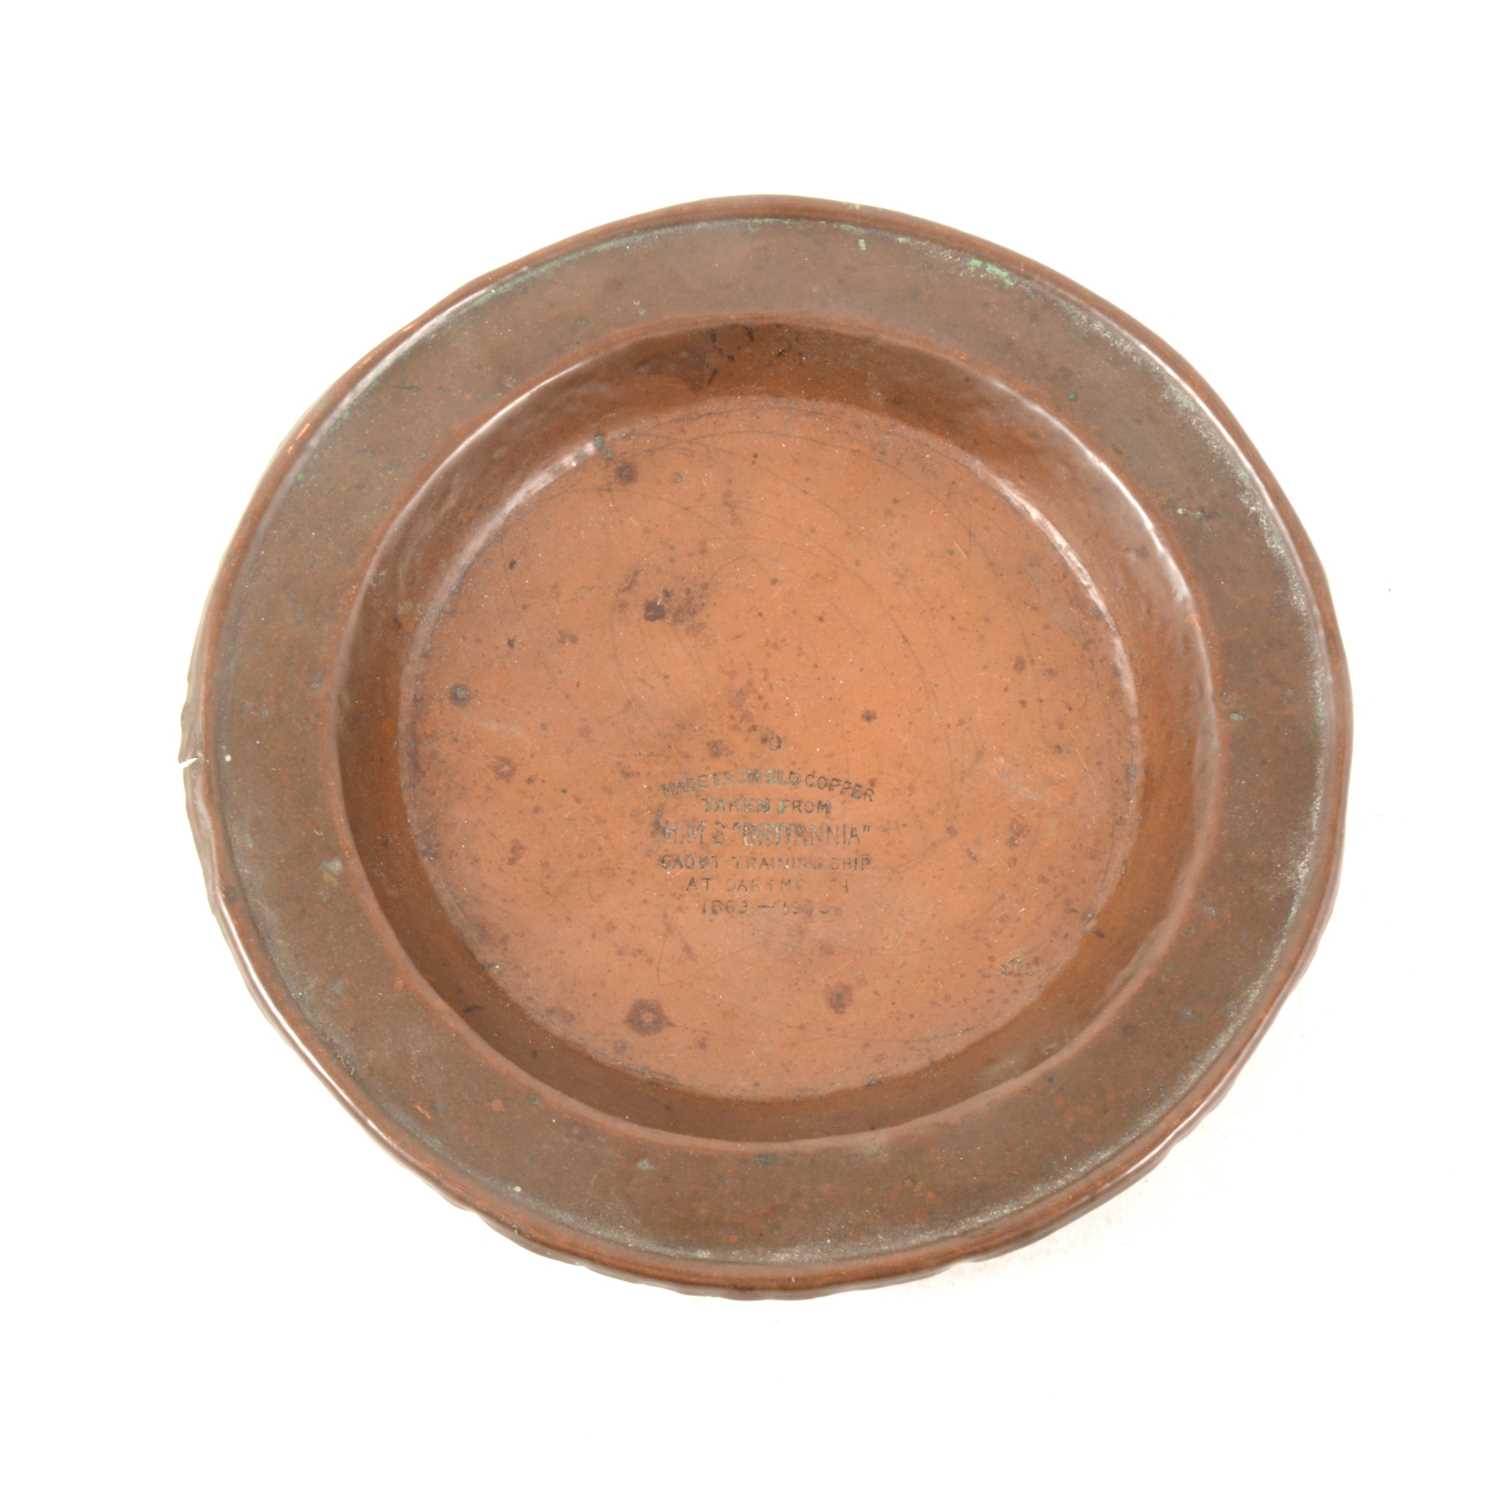 Lot 153 - Small copper plate, the metal taken from HMS Britannia